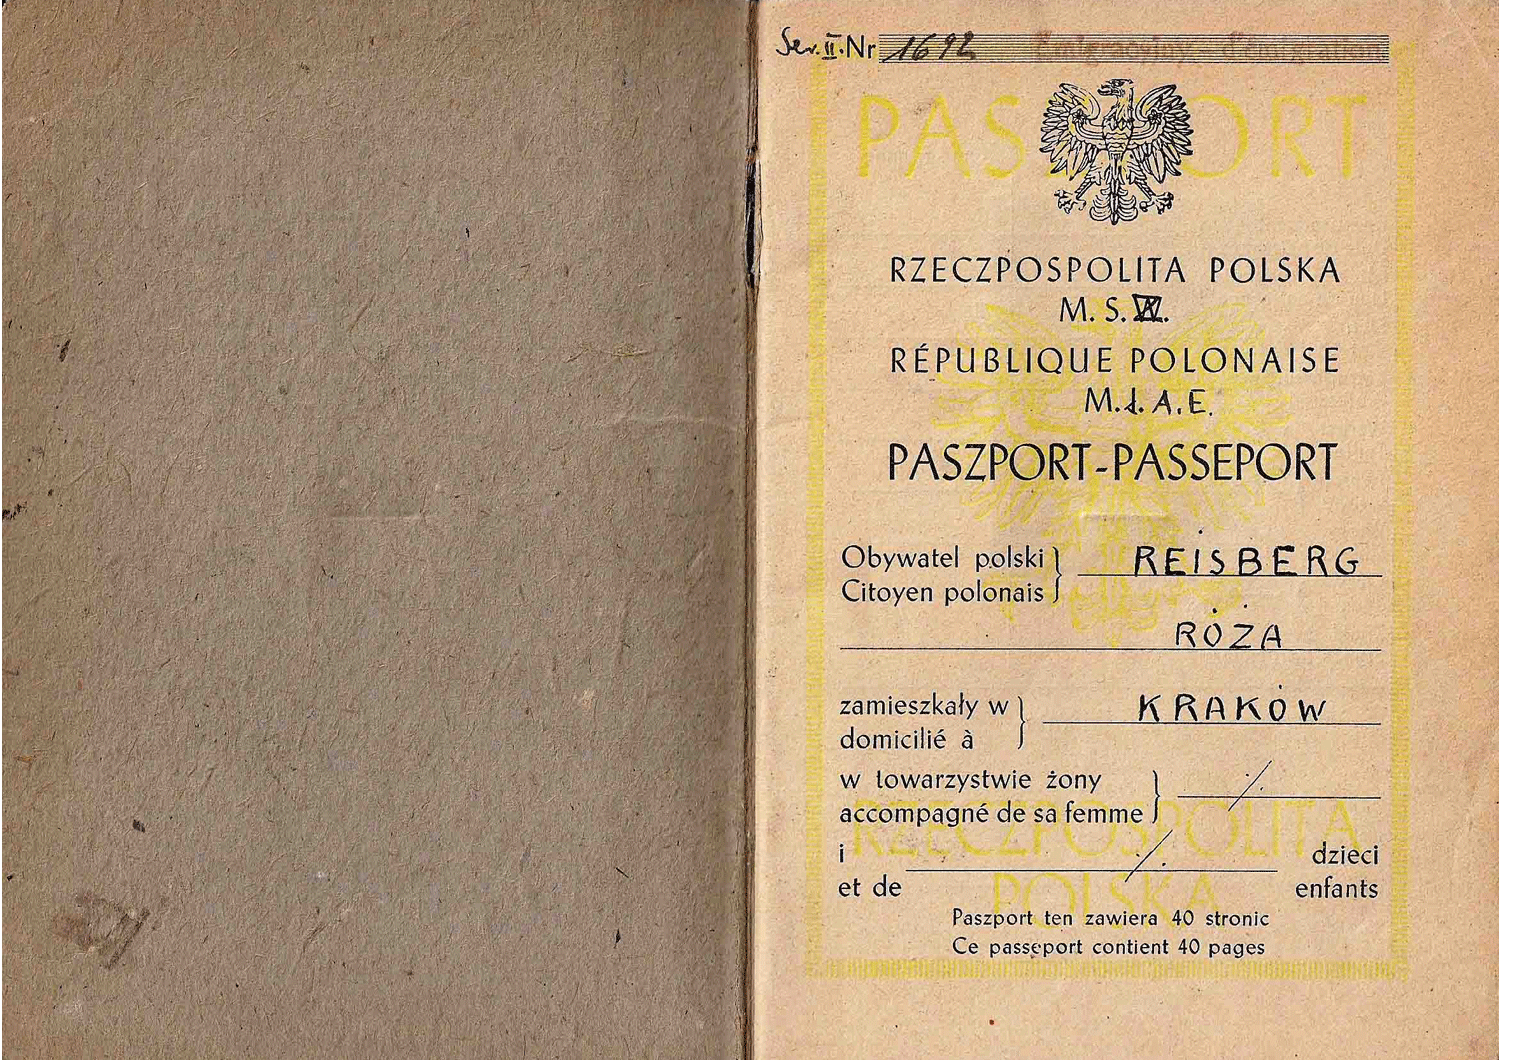 WW2 Polish passport